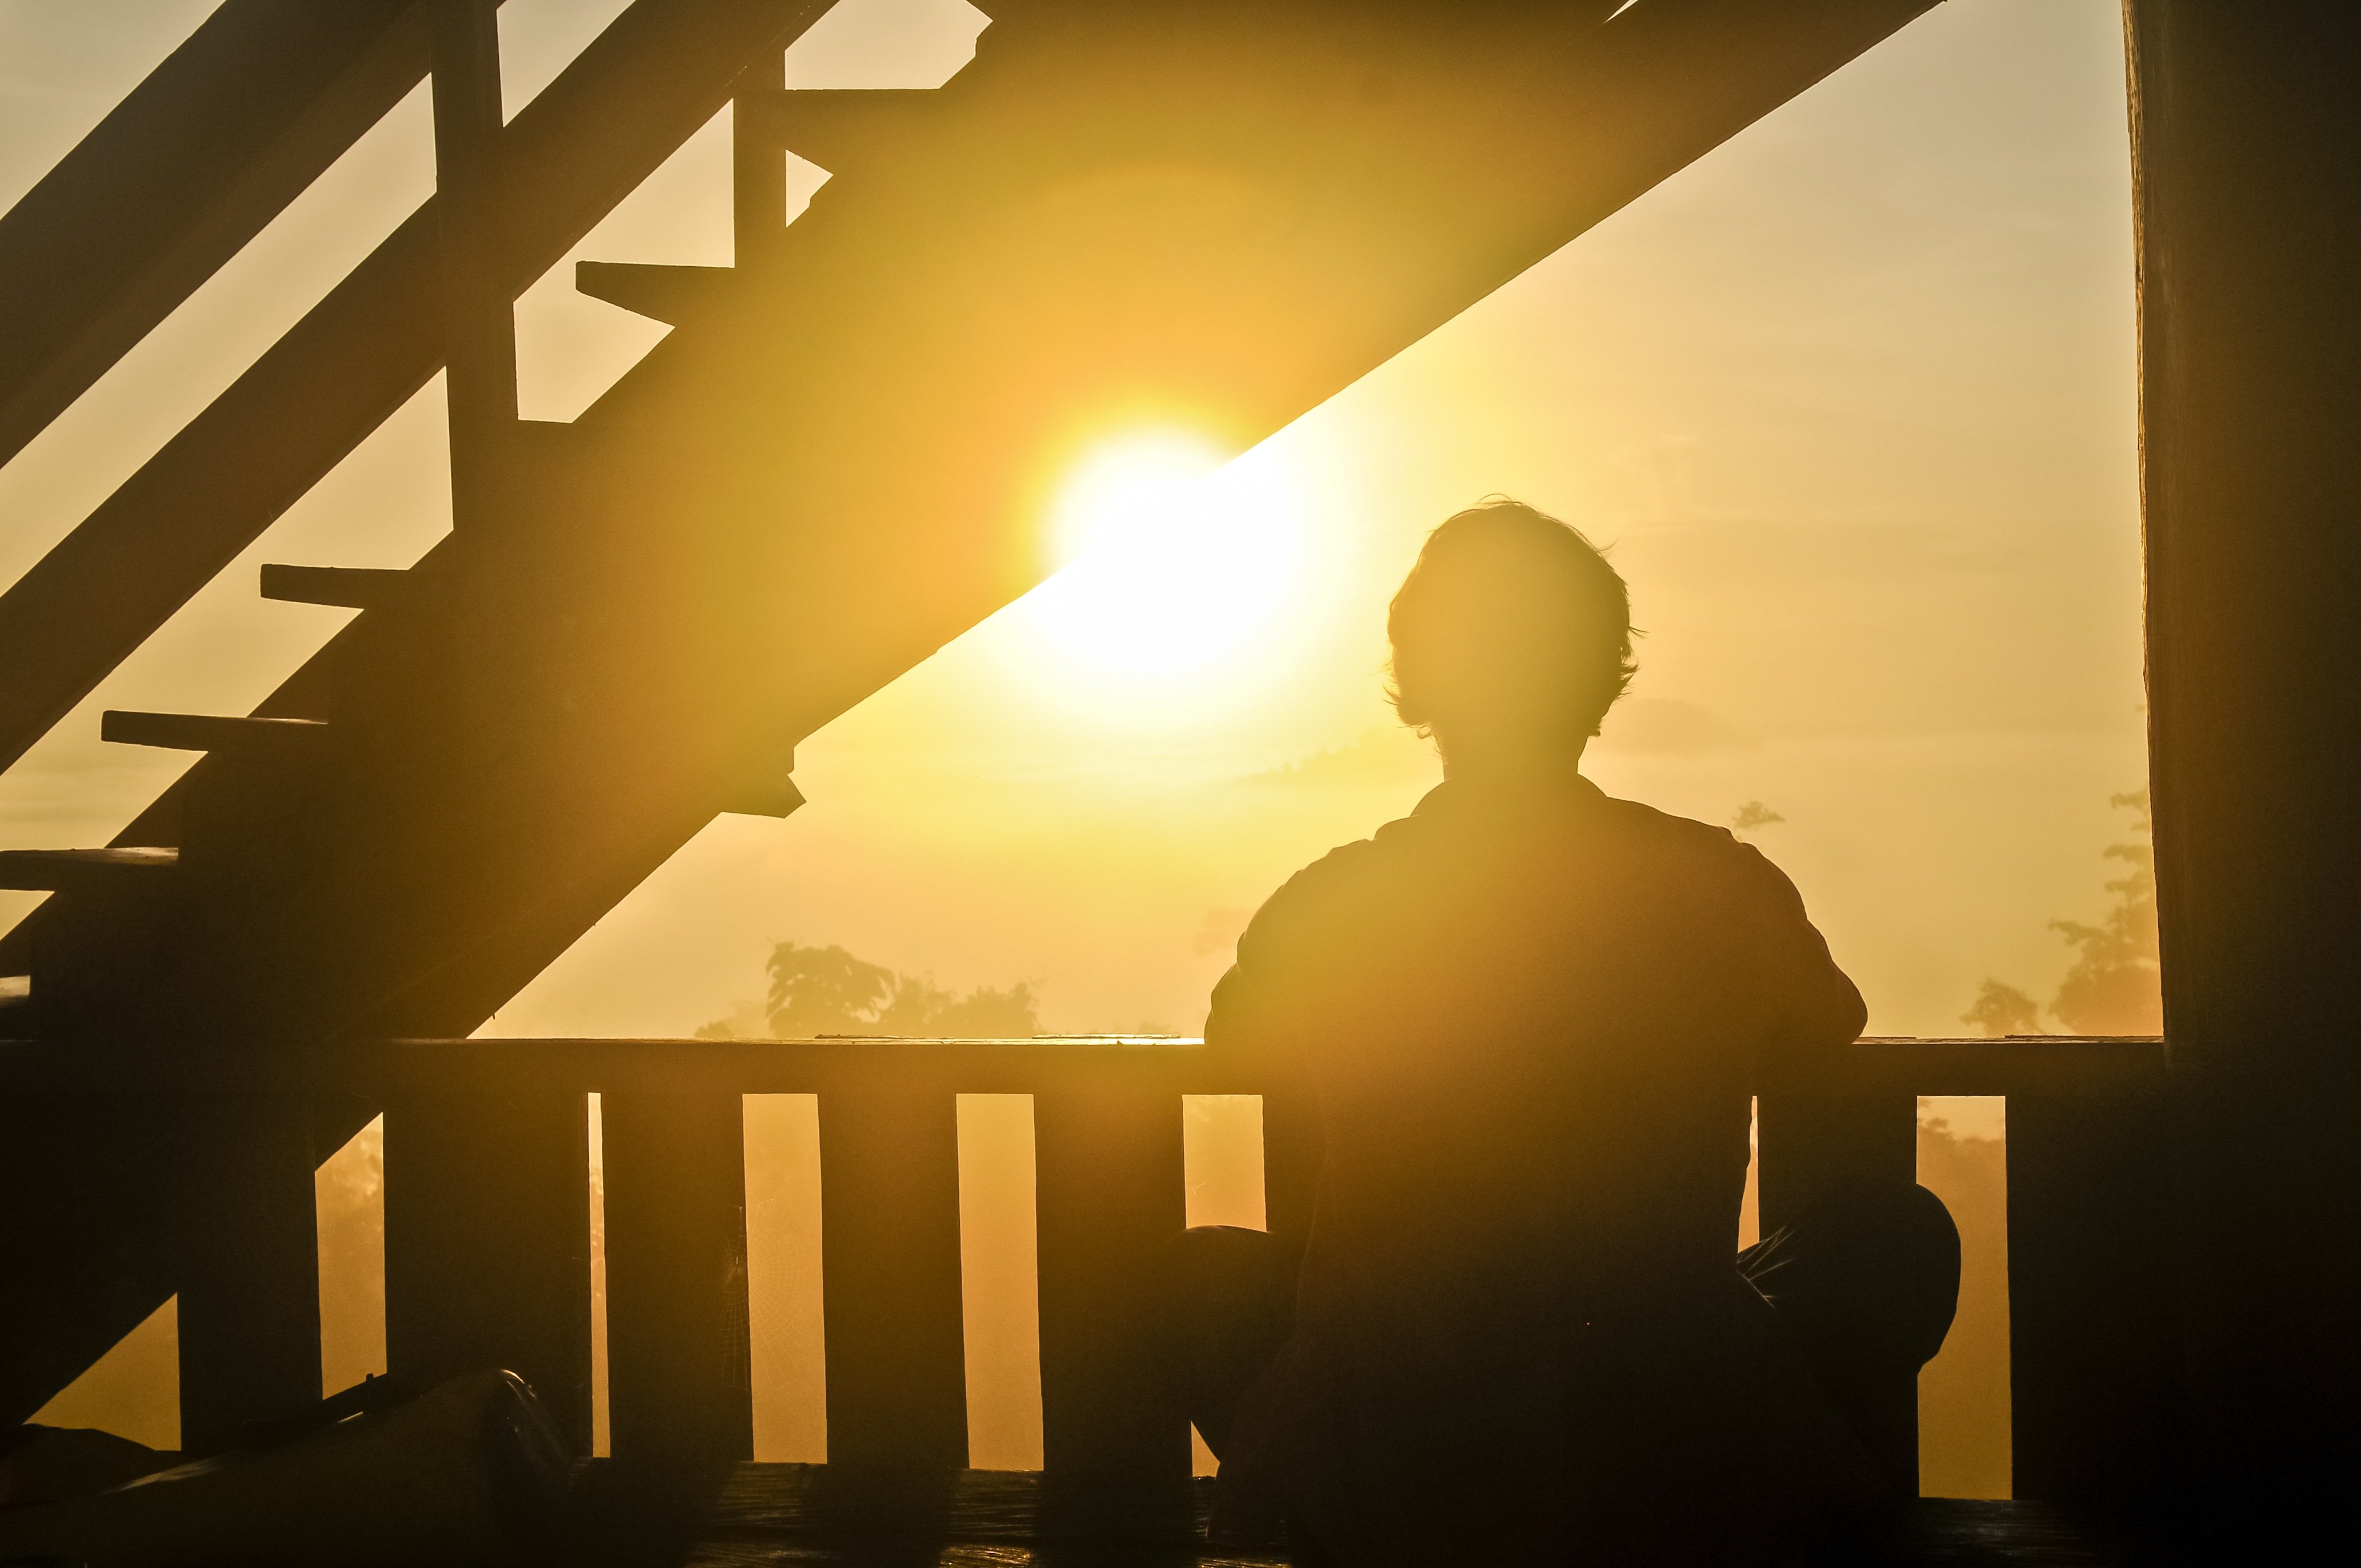 14 - Man Watching Sunrise On Balcony, Ed Gregory, Stokpic